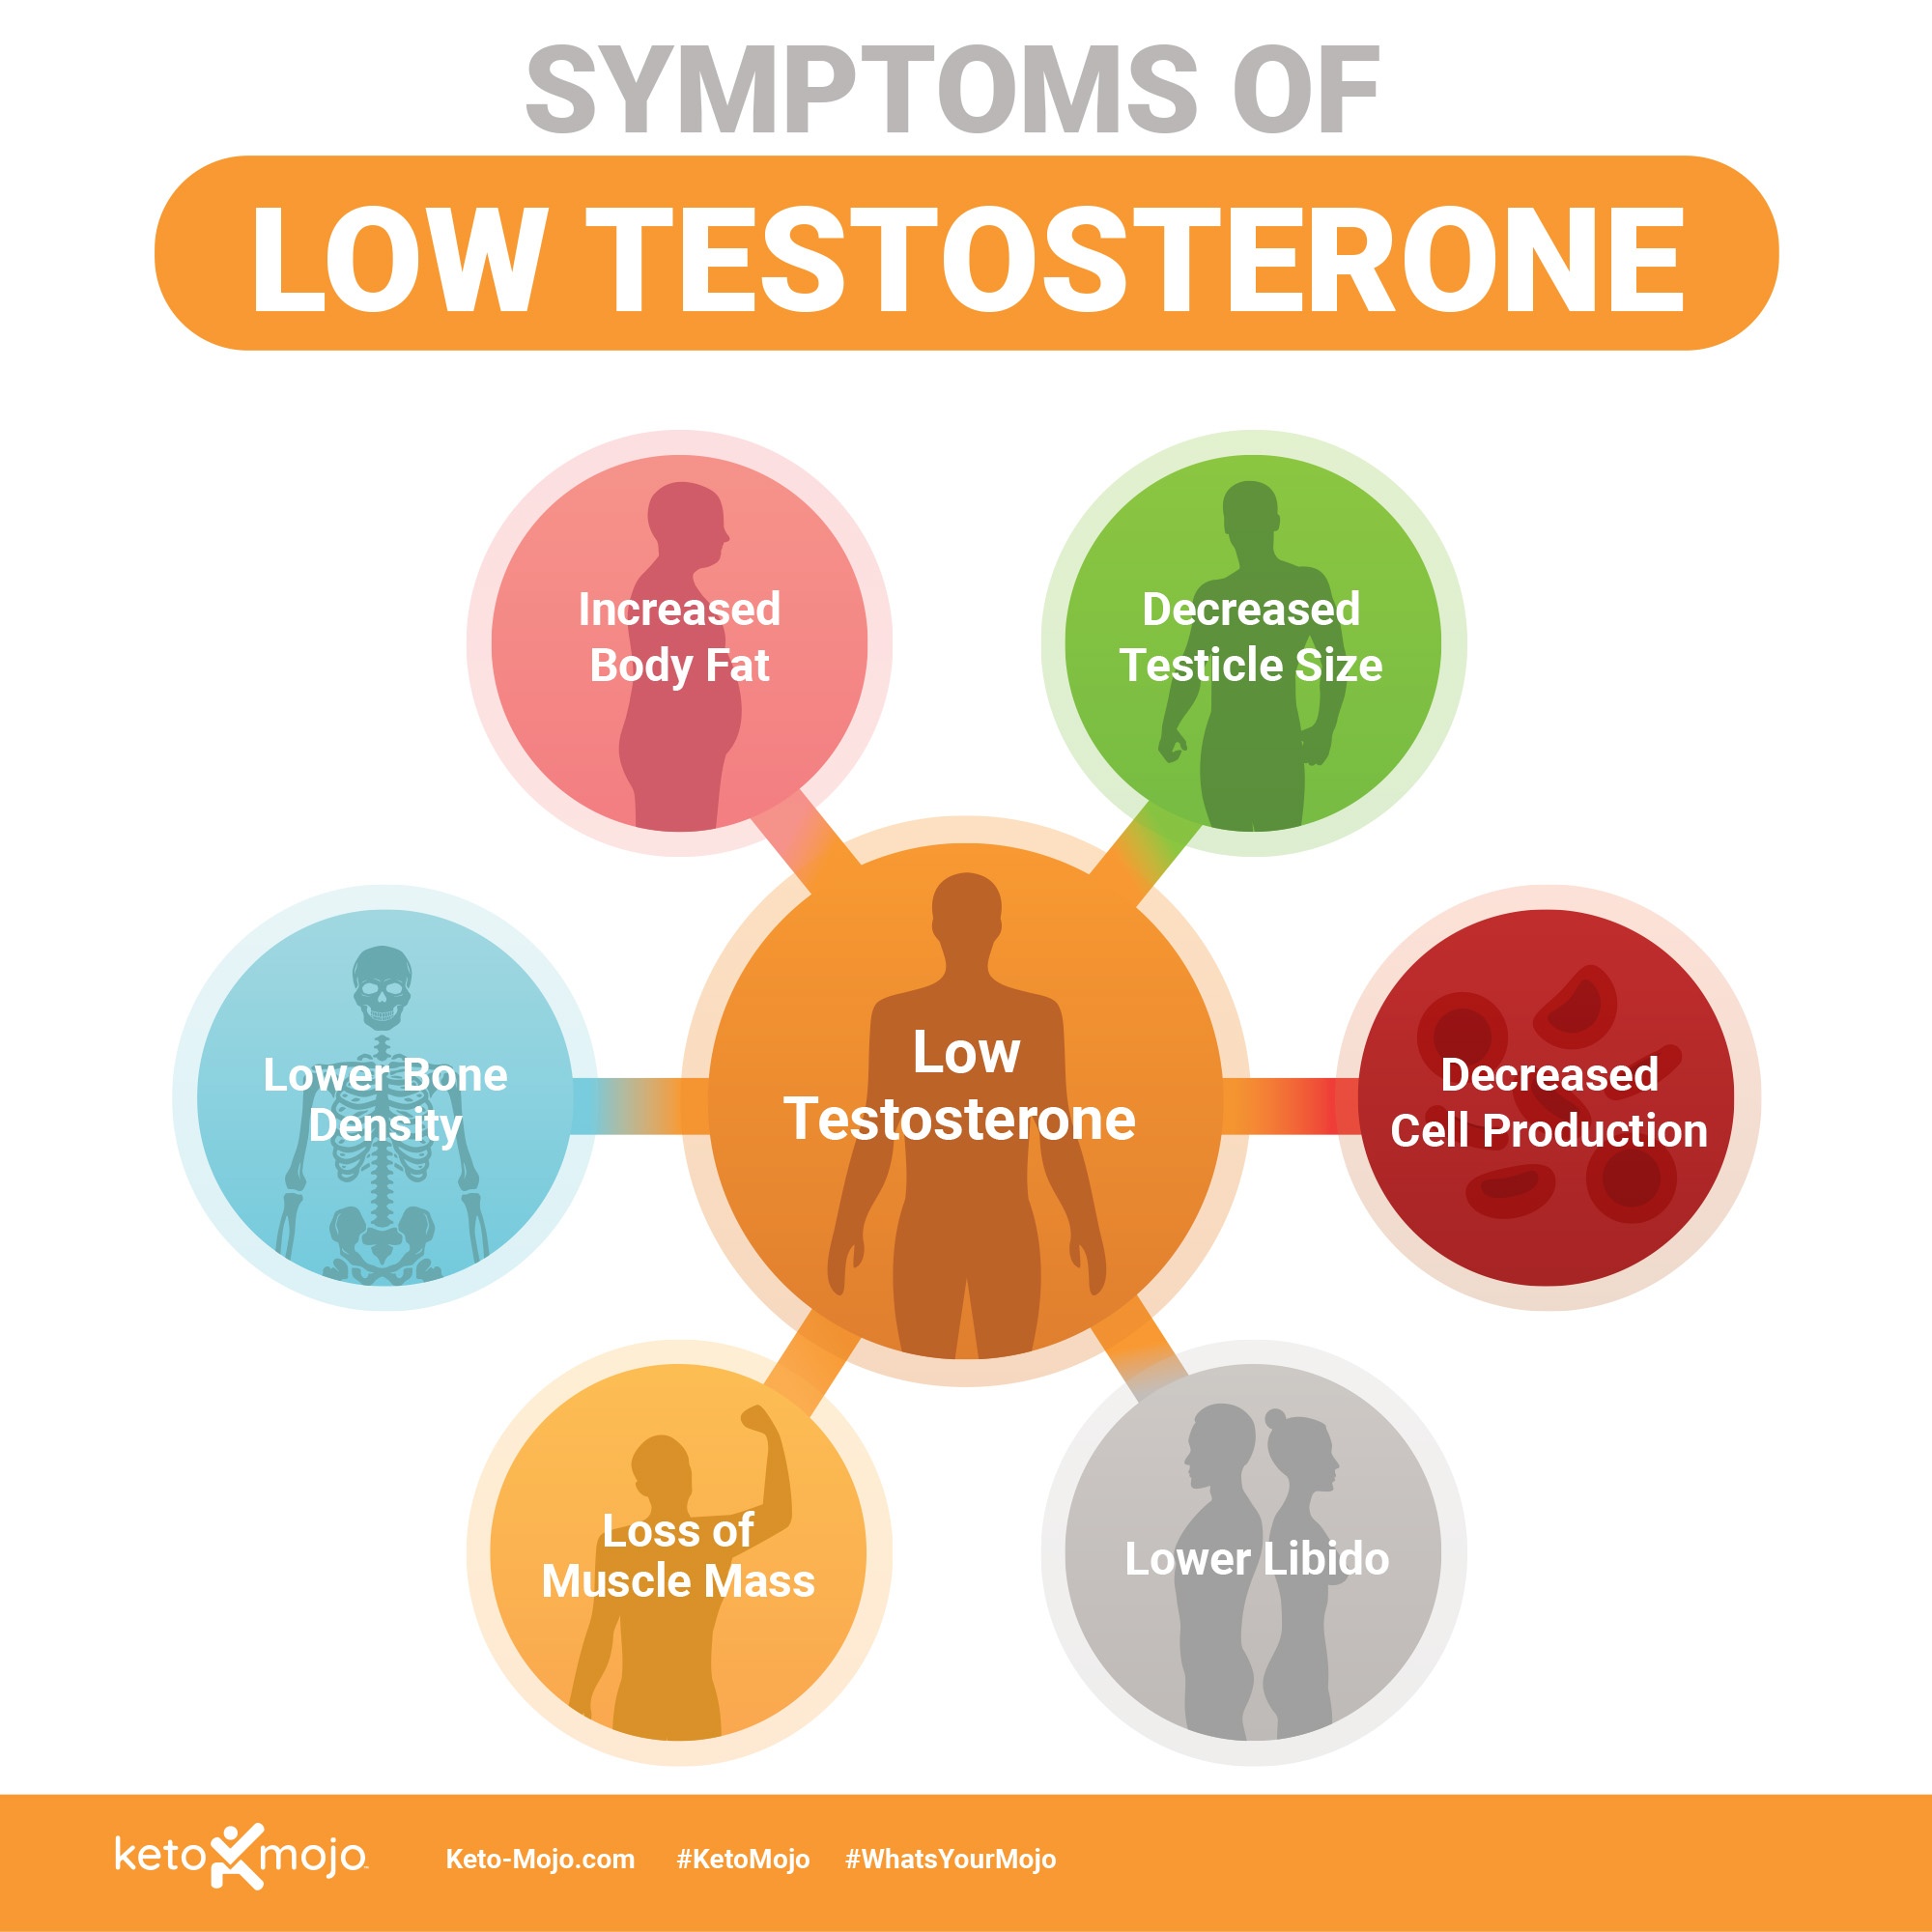 keto diet effect on testosterone